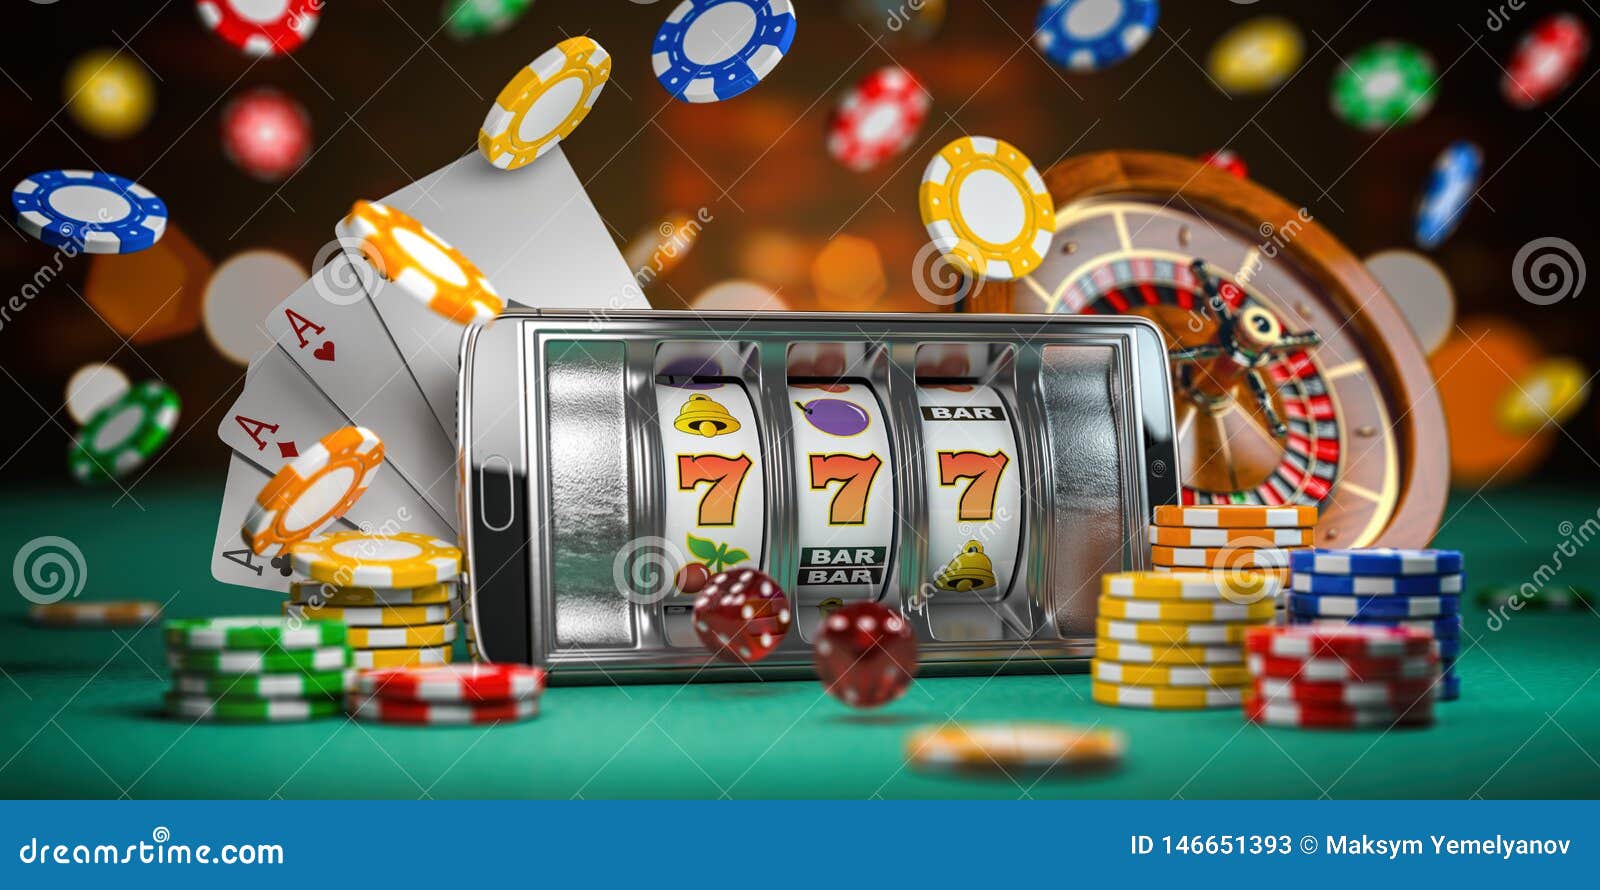 Make bets online in Australian online casino